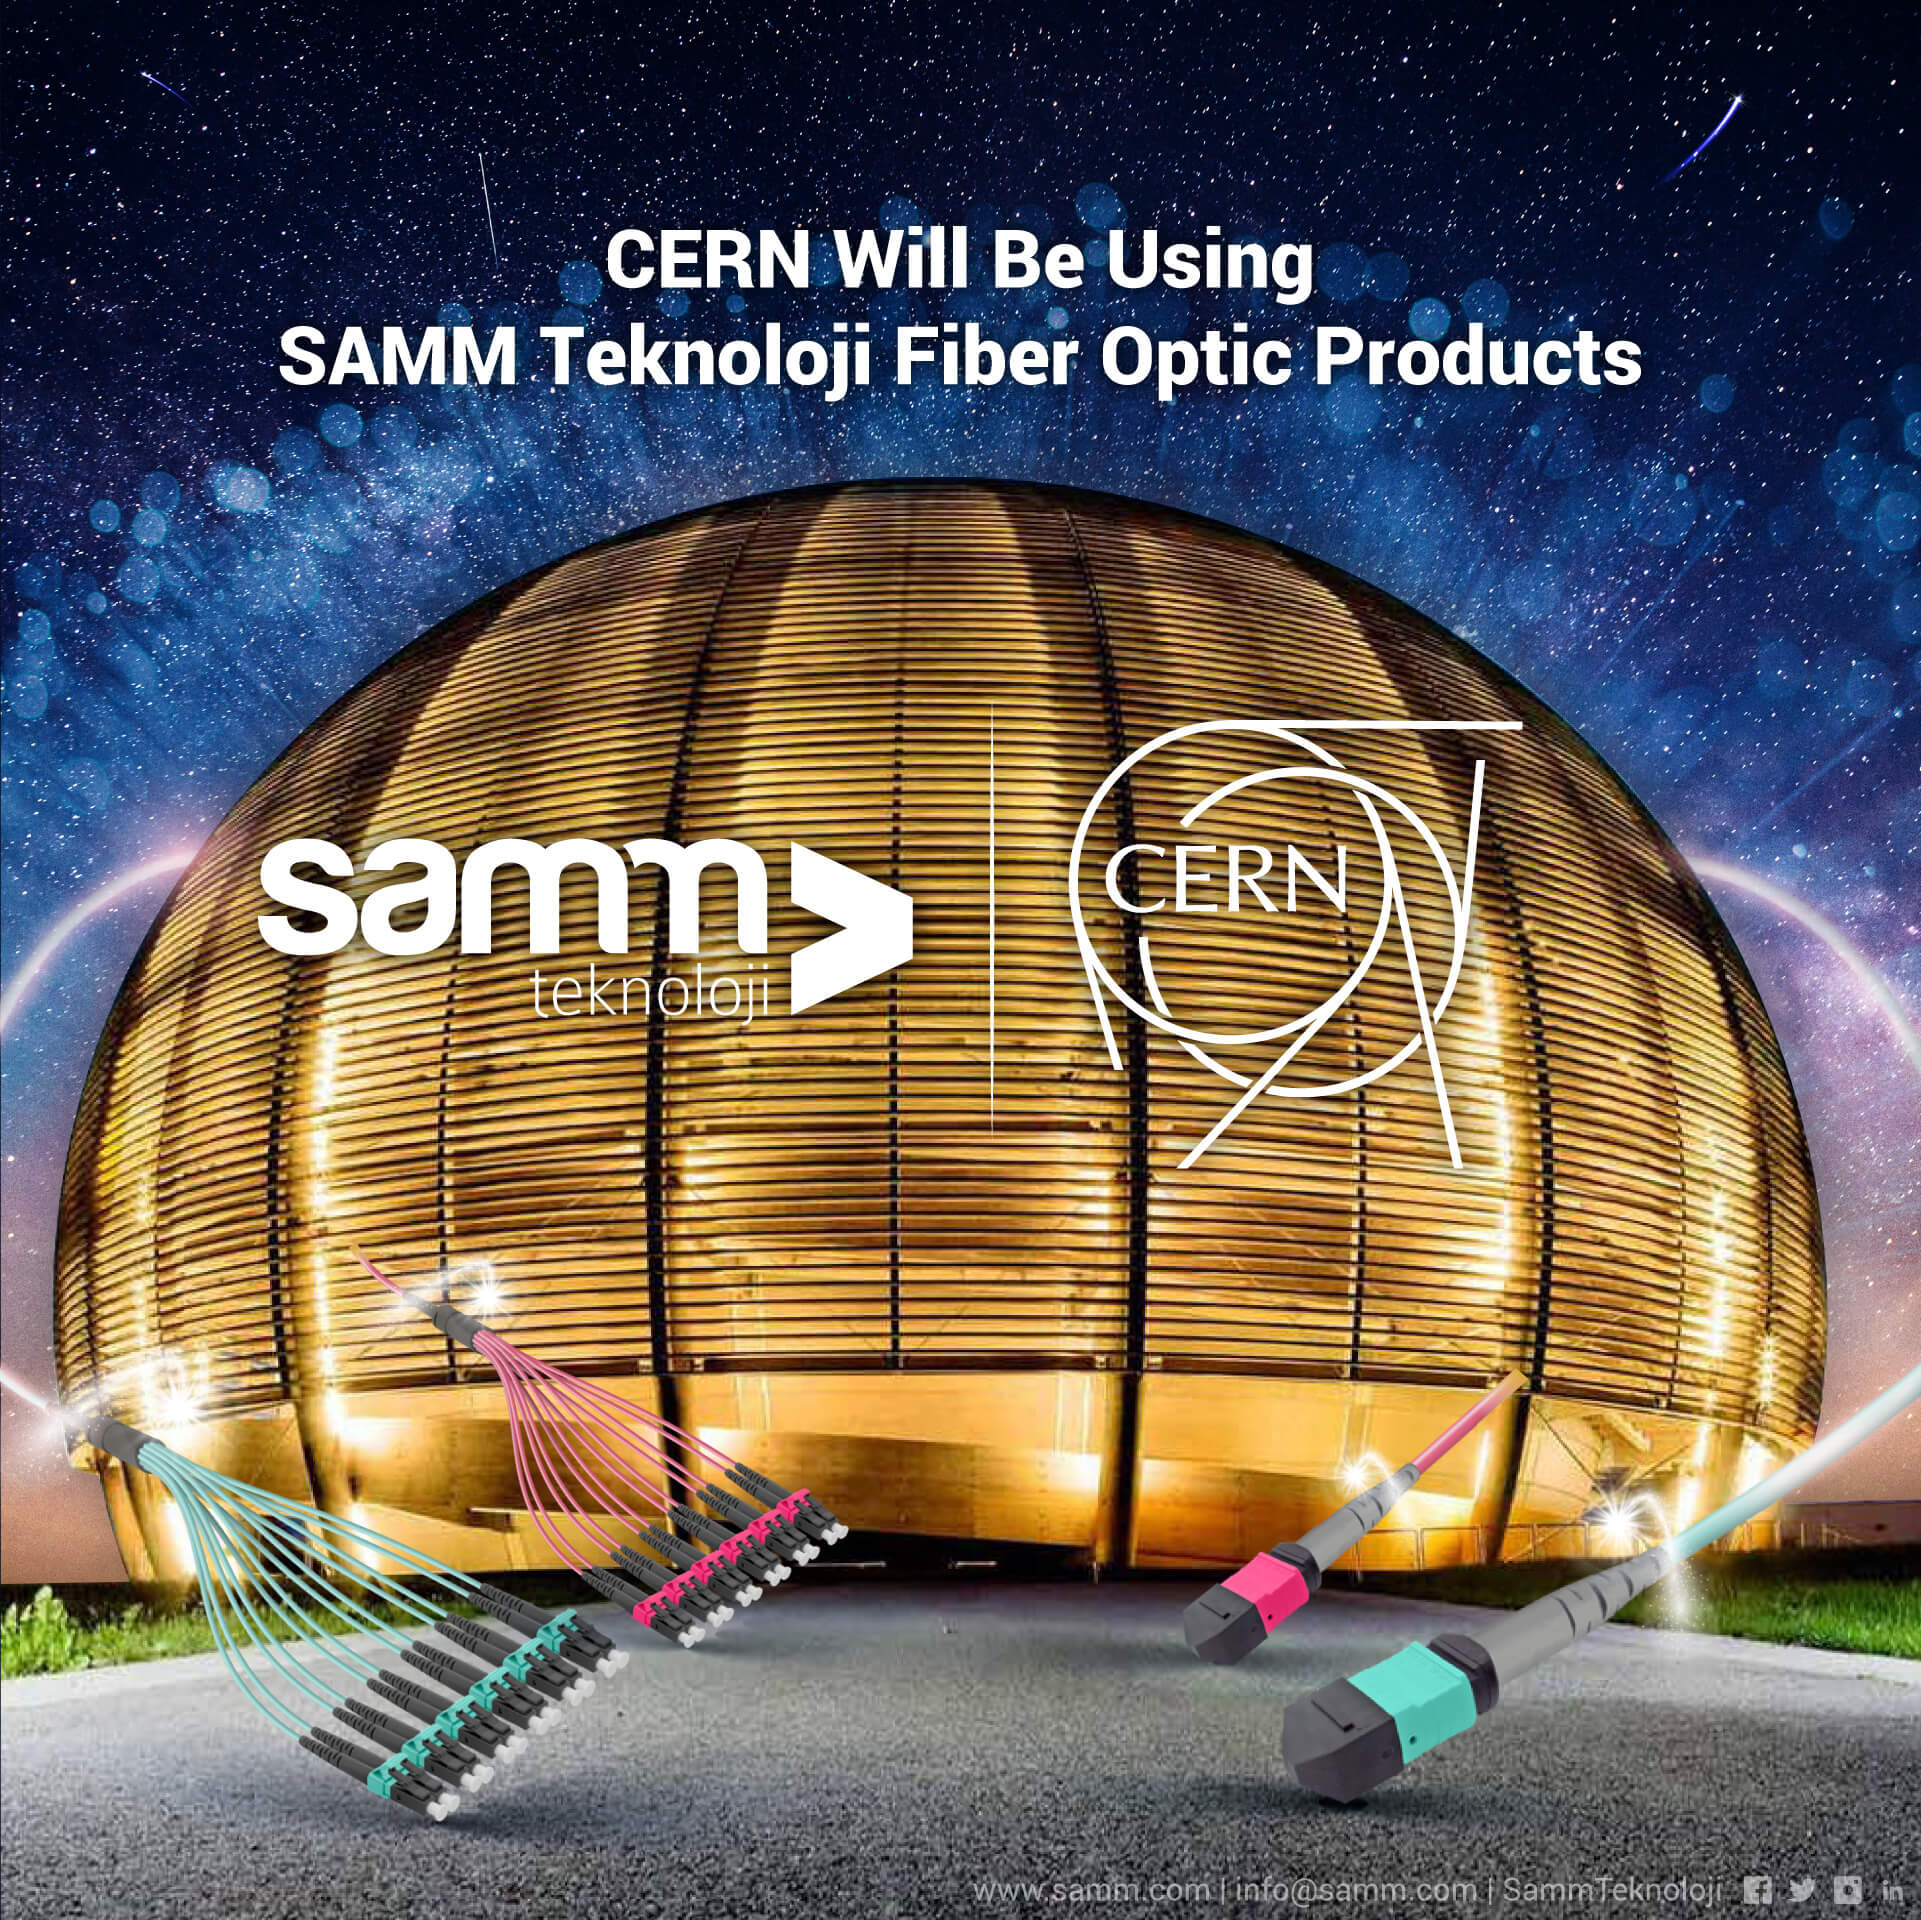 CERN-Samm-Teknoloji-Agreement